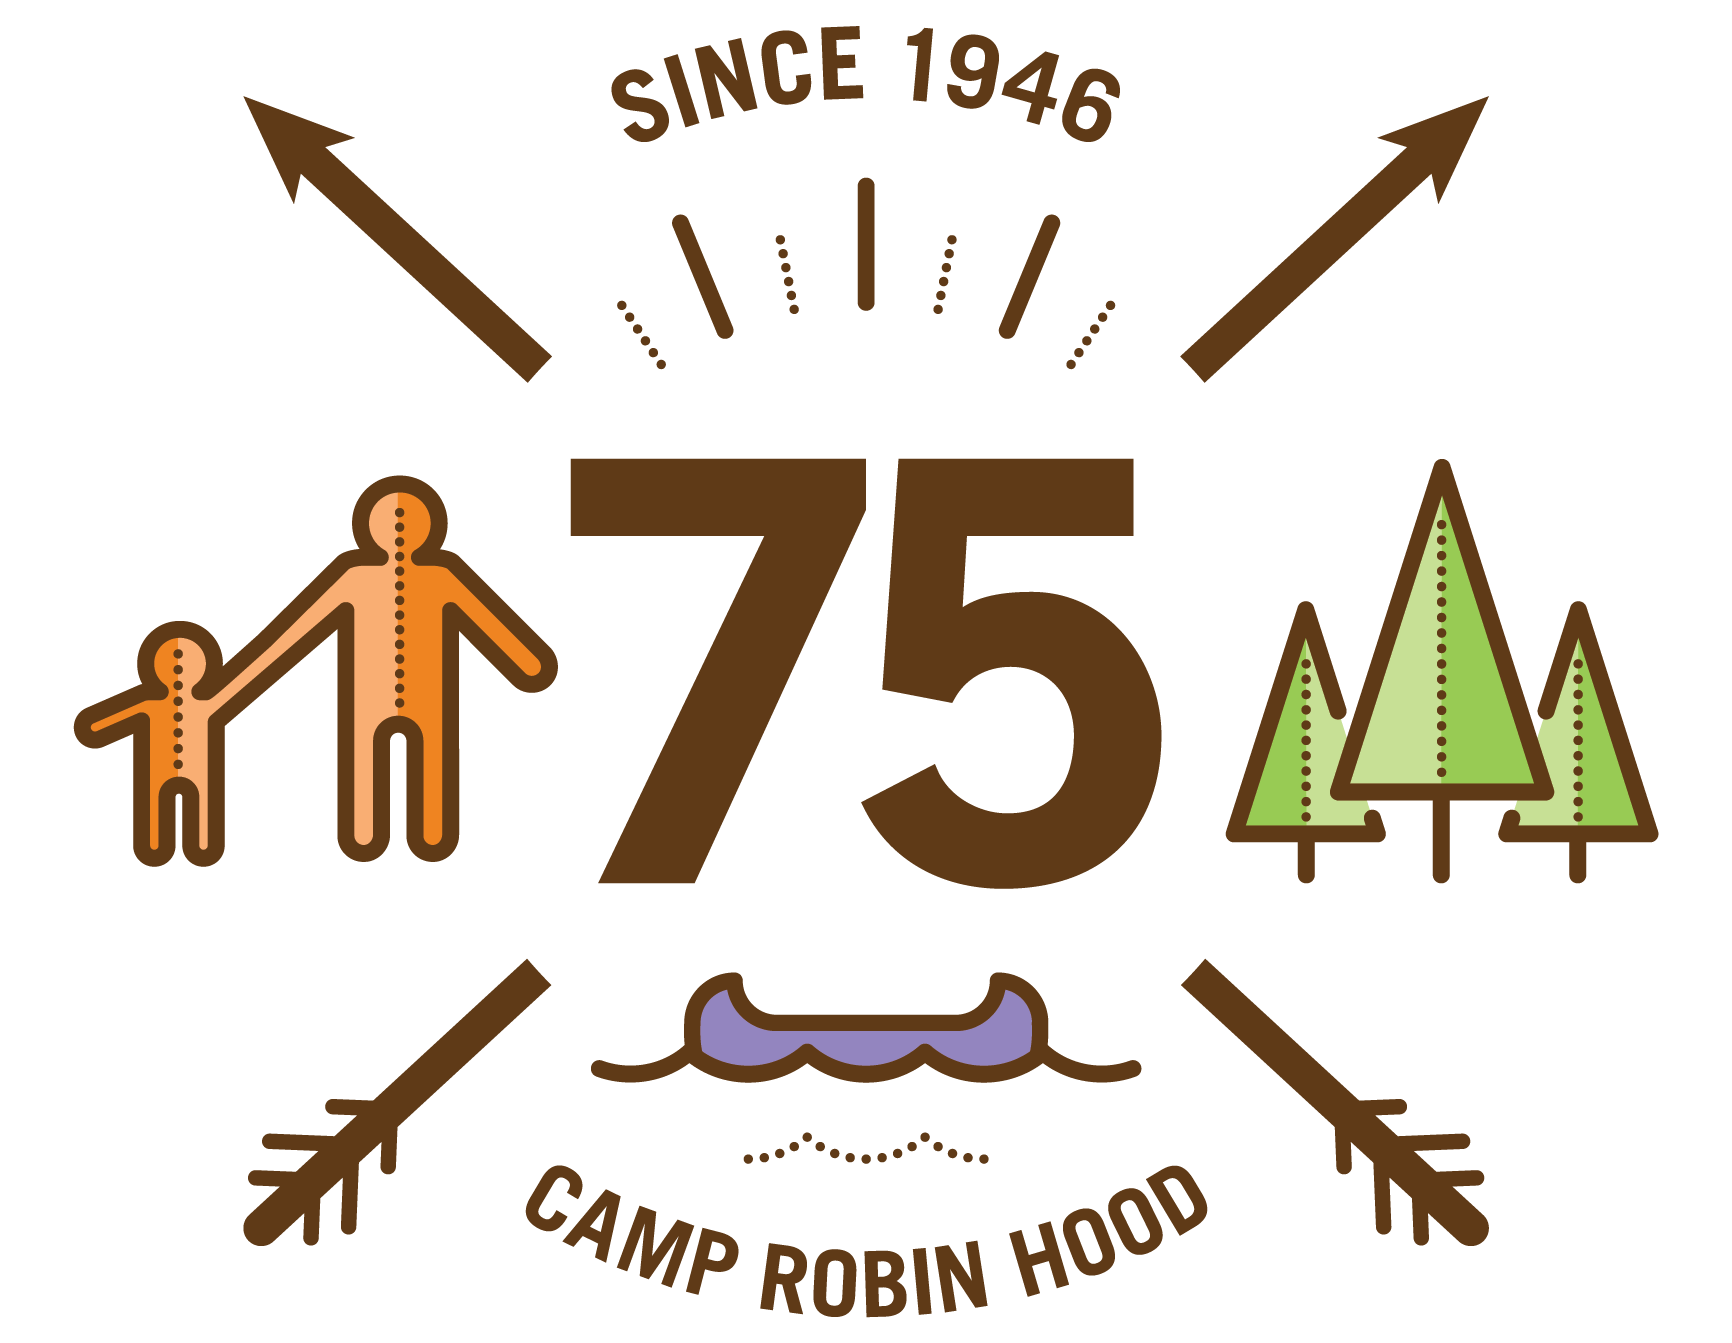 Camp Robin Hood's 75th Anniversary Logo